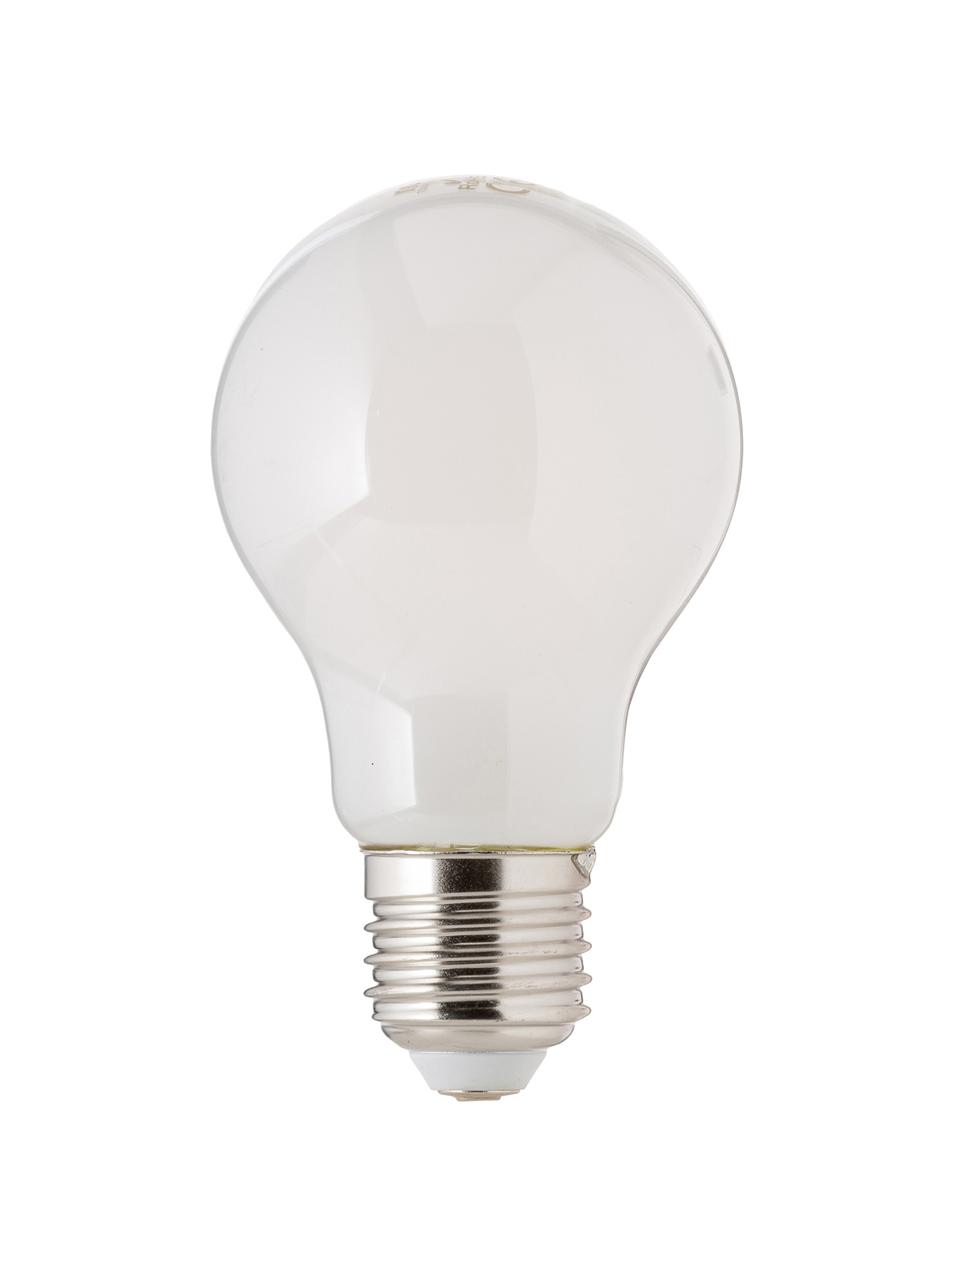 E27 Leuchtmittel, 4W, warmweiß, 5 Stück, Leuchtmittelschirm: Opalglas, Leuchtmittelfassung: Aluminium, Weiß, Ø 8 x H 10 cm